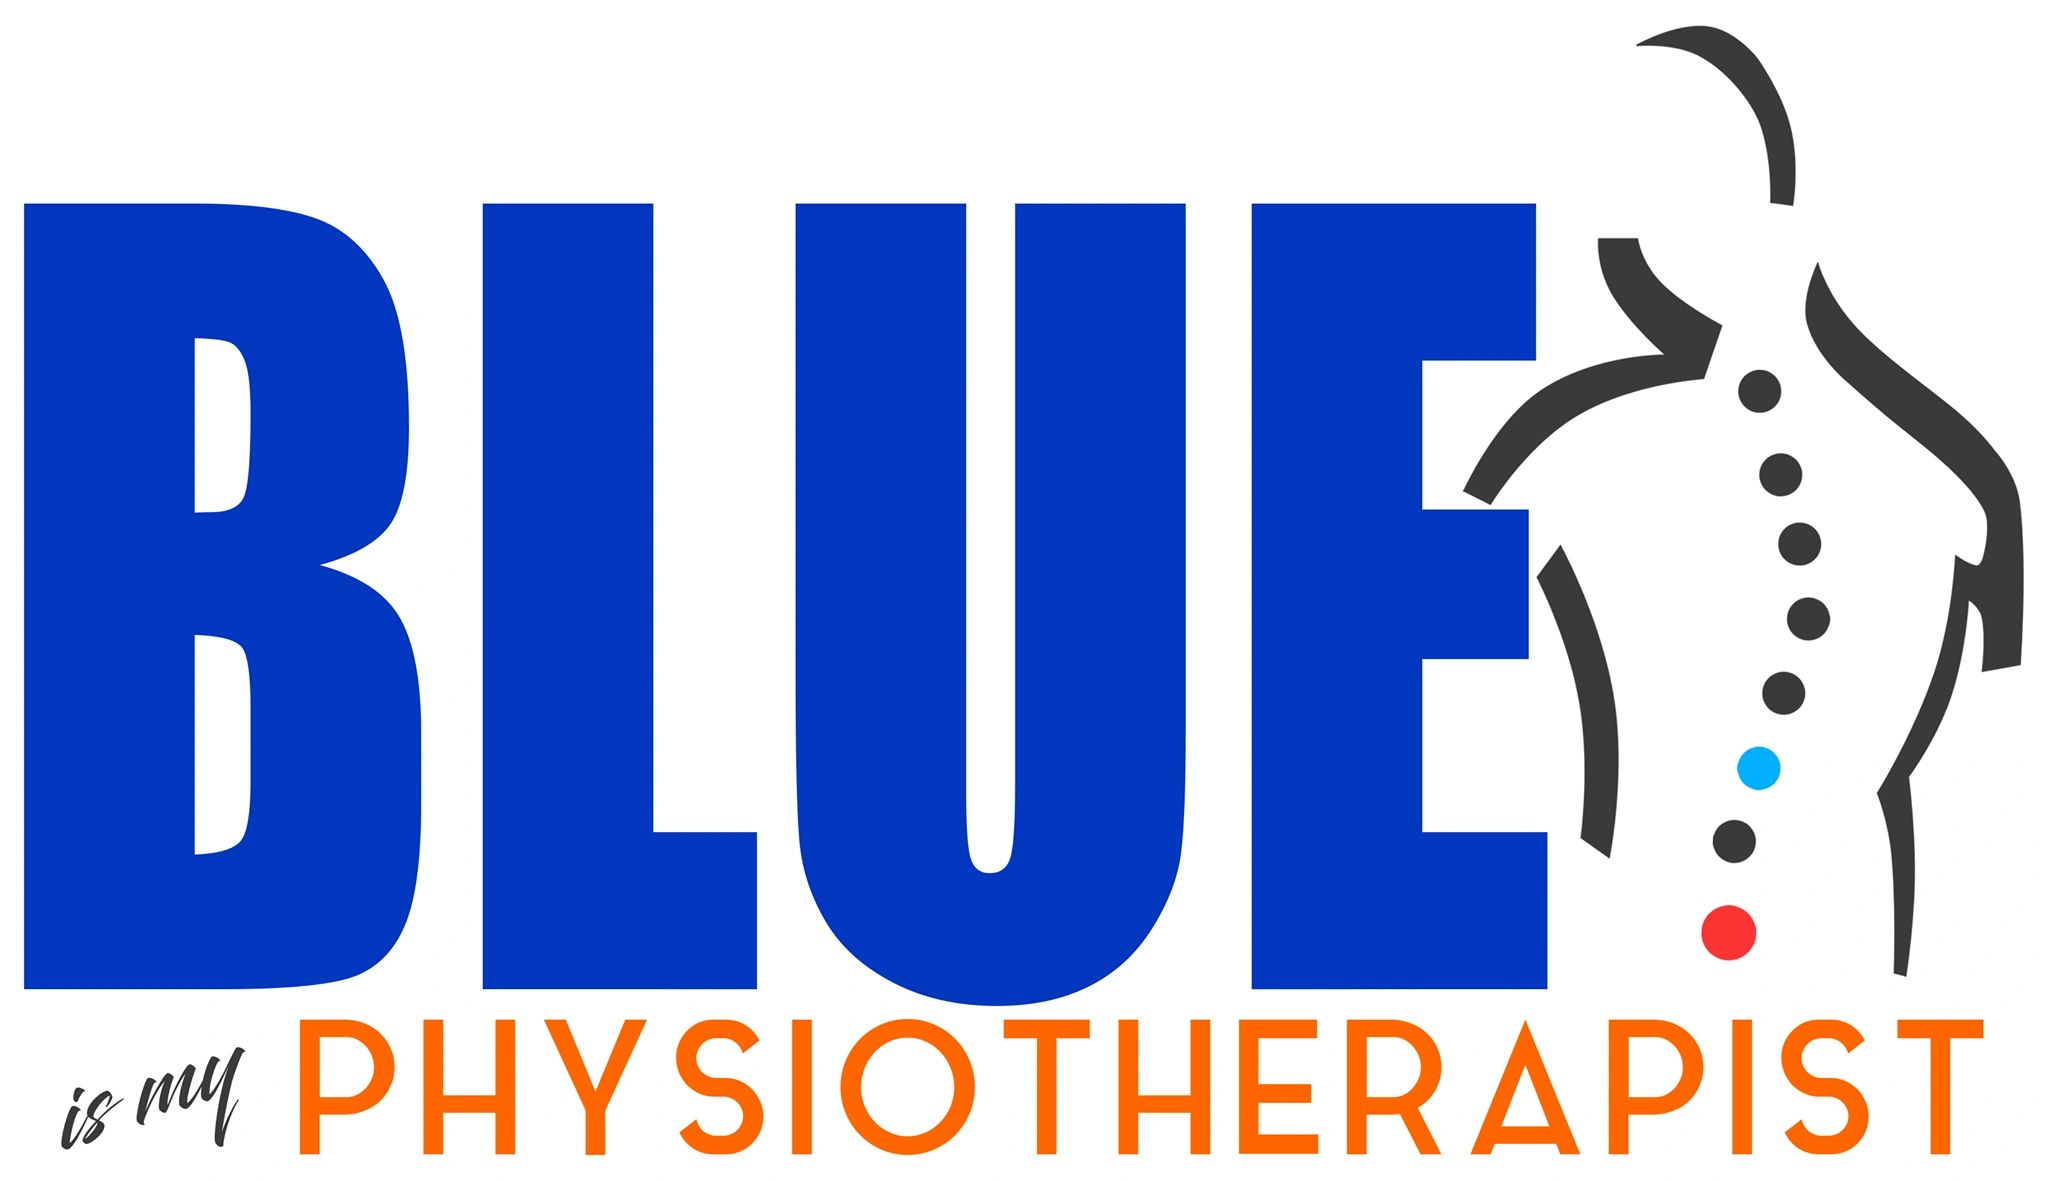 Bluephysio official logo 2020